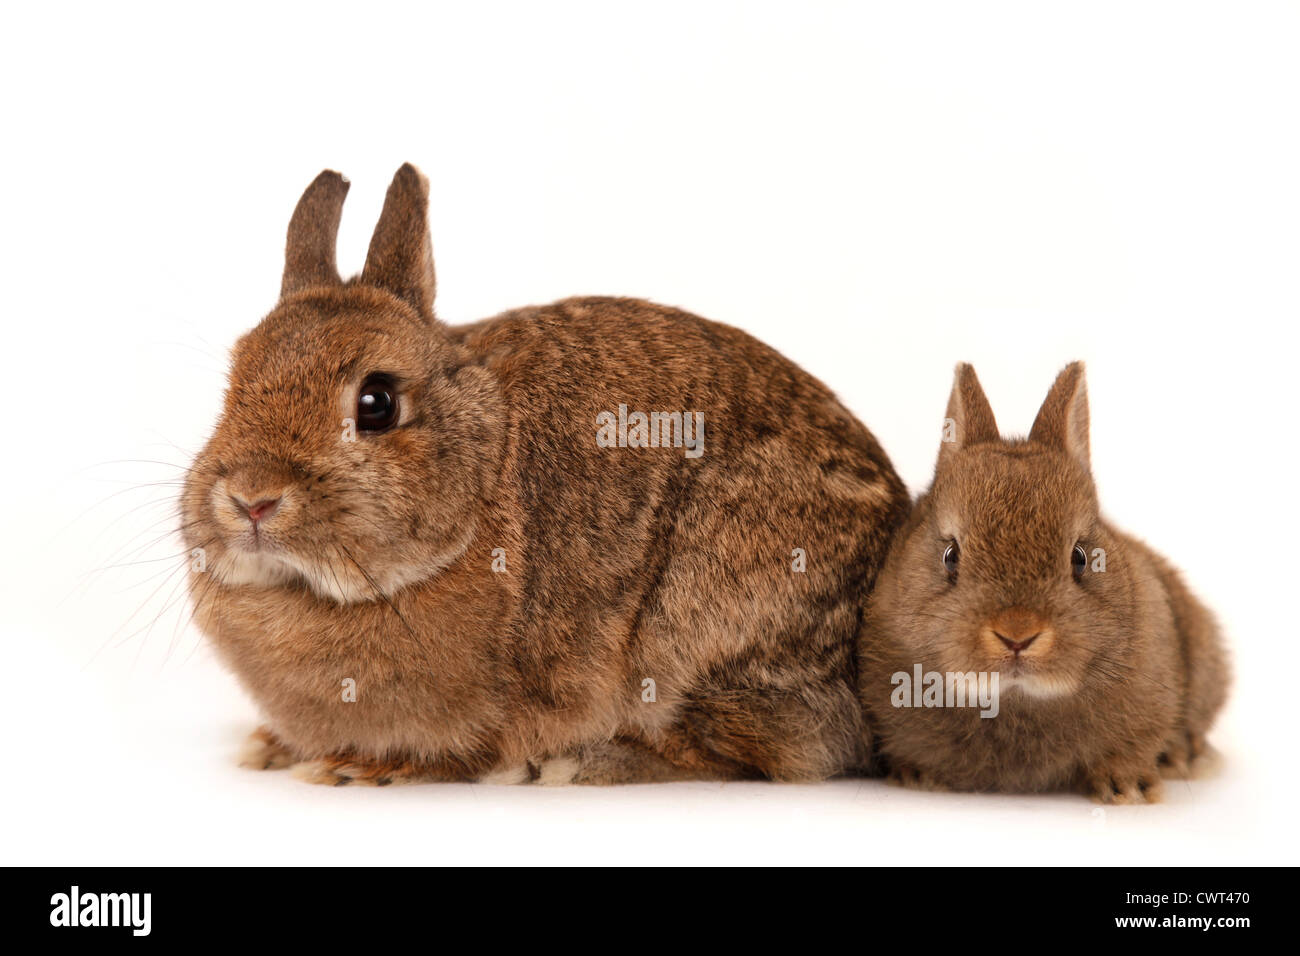 Farbenzwerg / dwarf lop-eared bunny Stock Photo